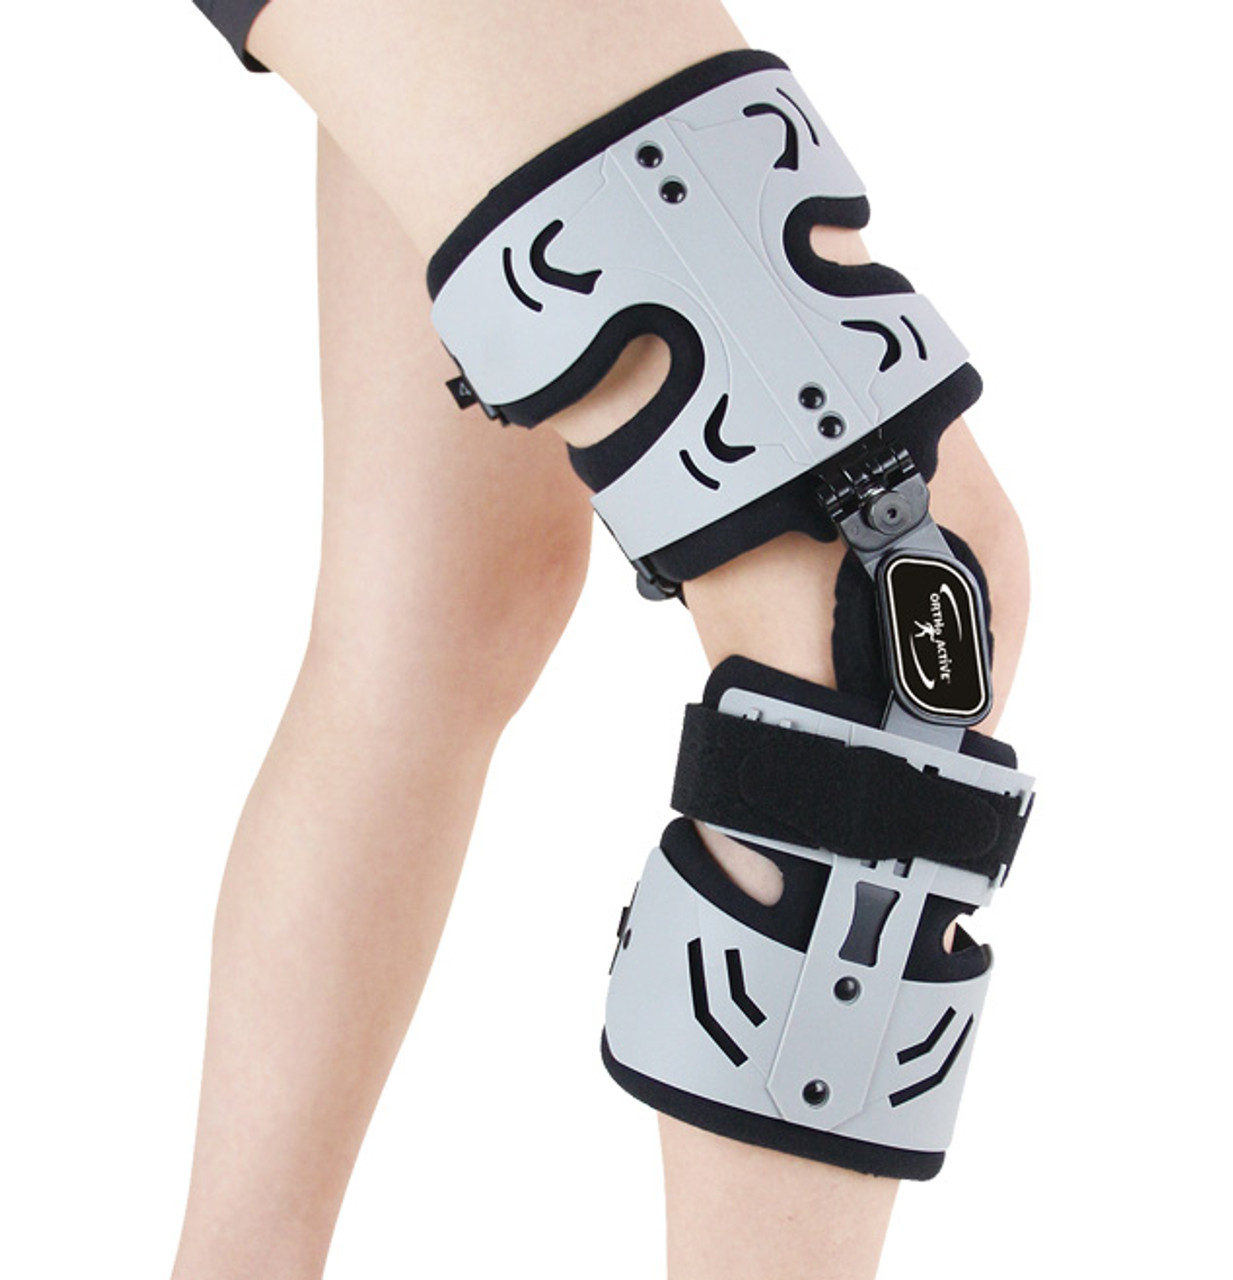 OA/Arthritis Knee Brace